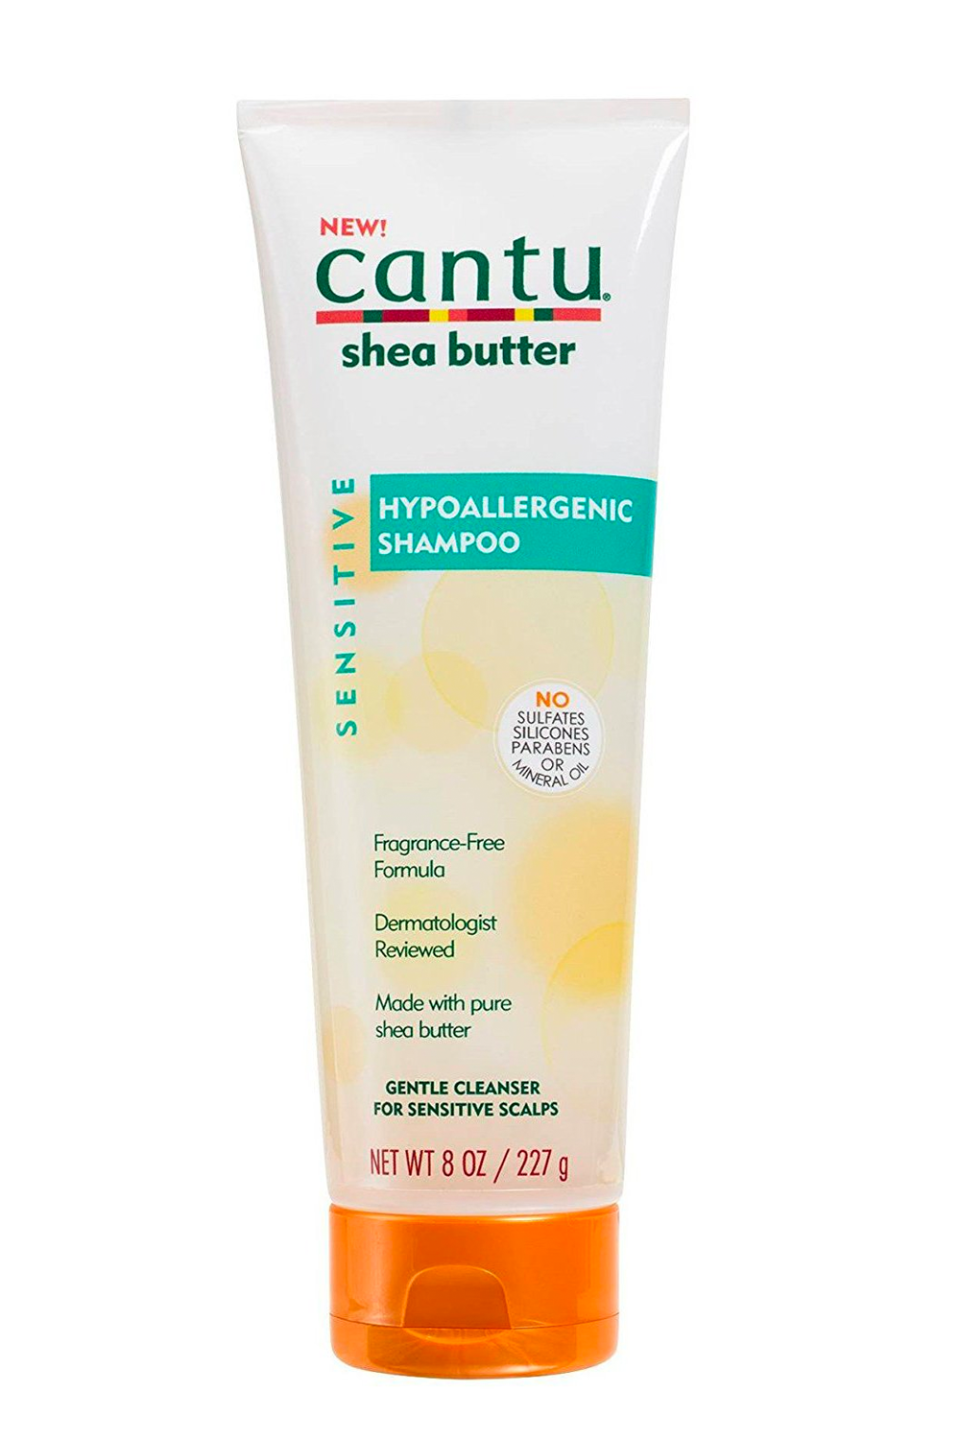 5) Cantu Shea Butter Shampoo Hypoallergenic